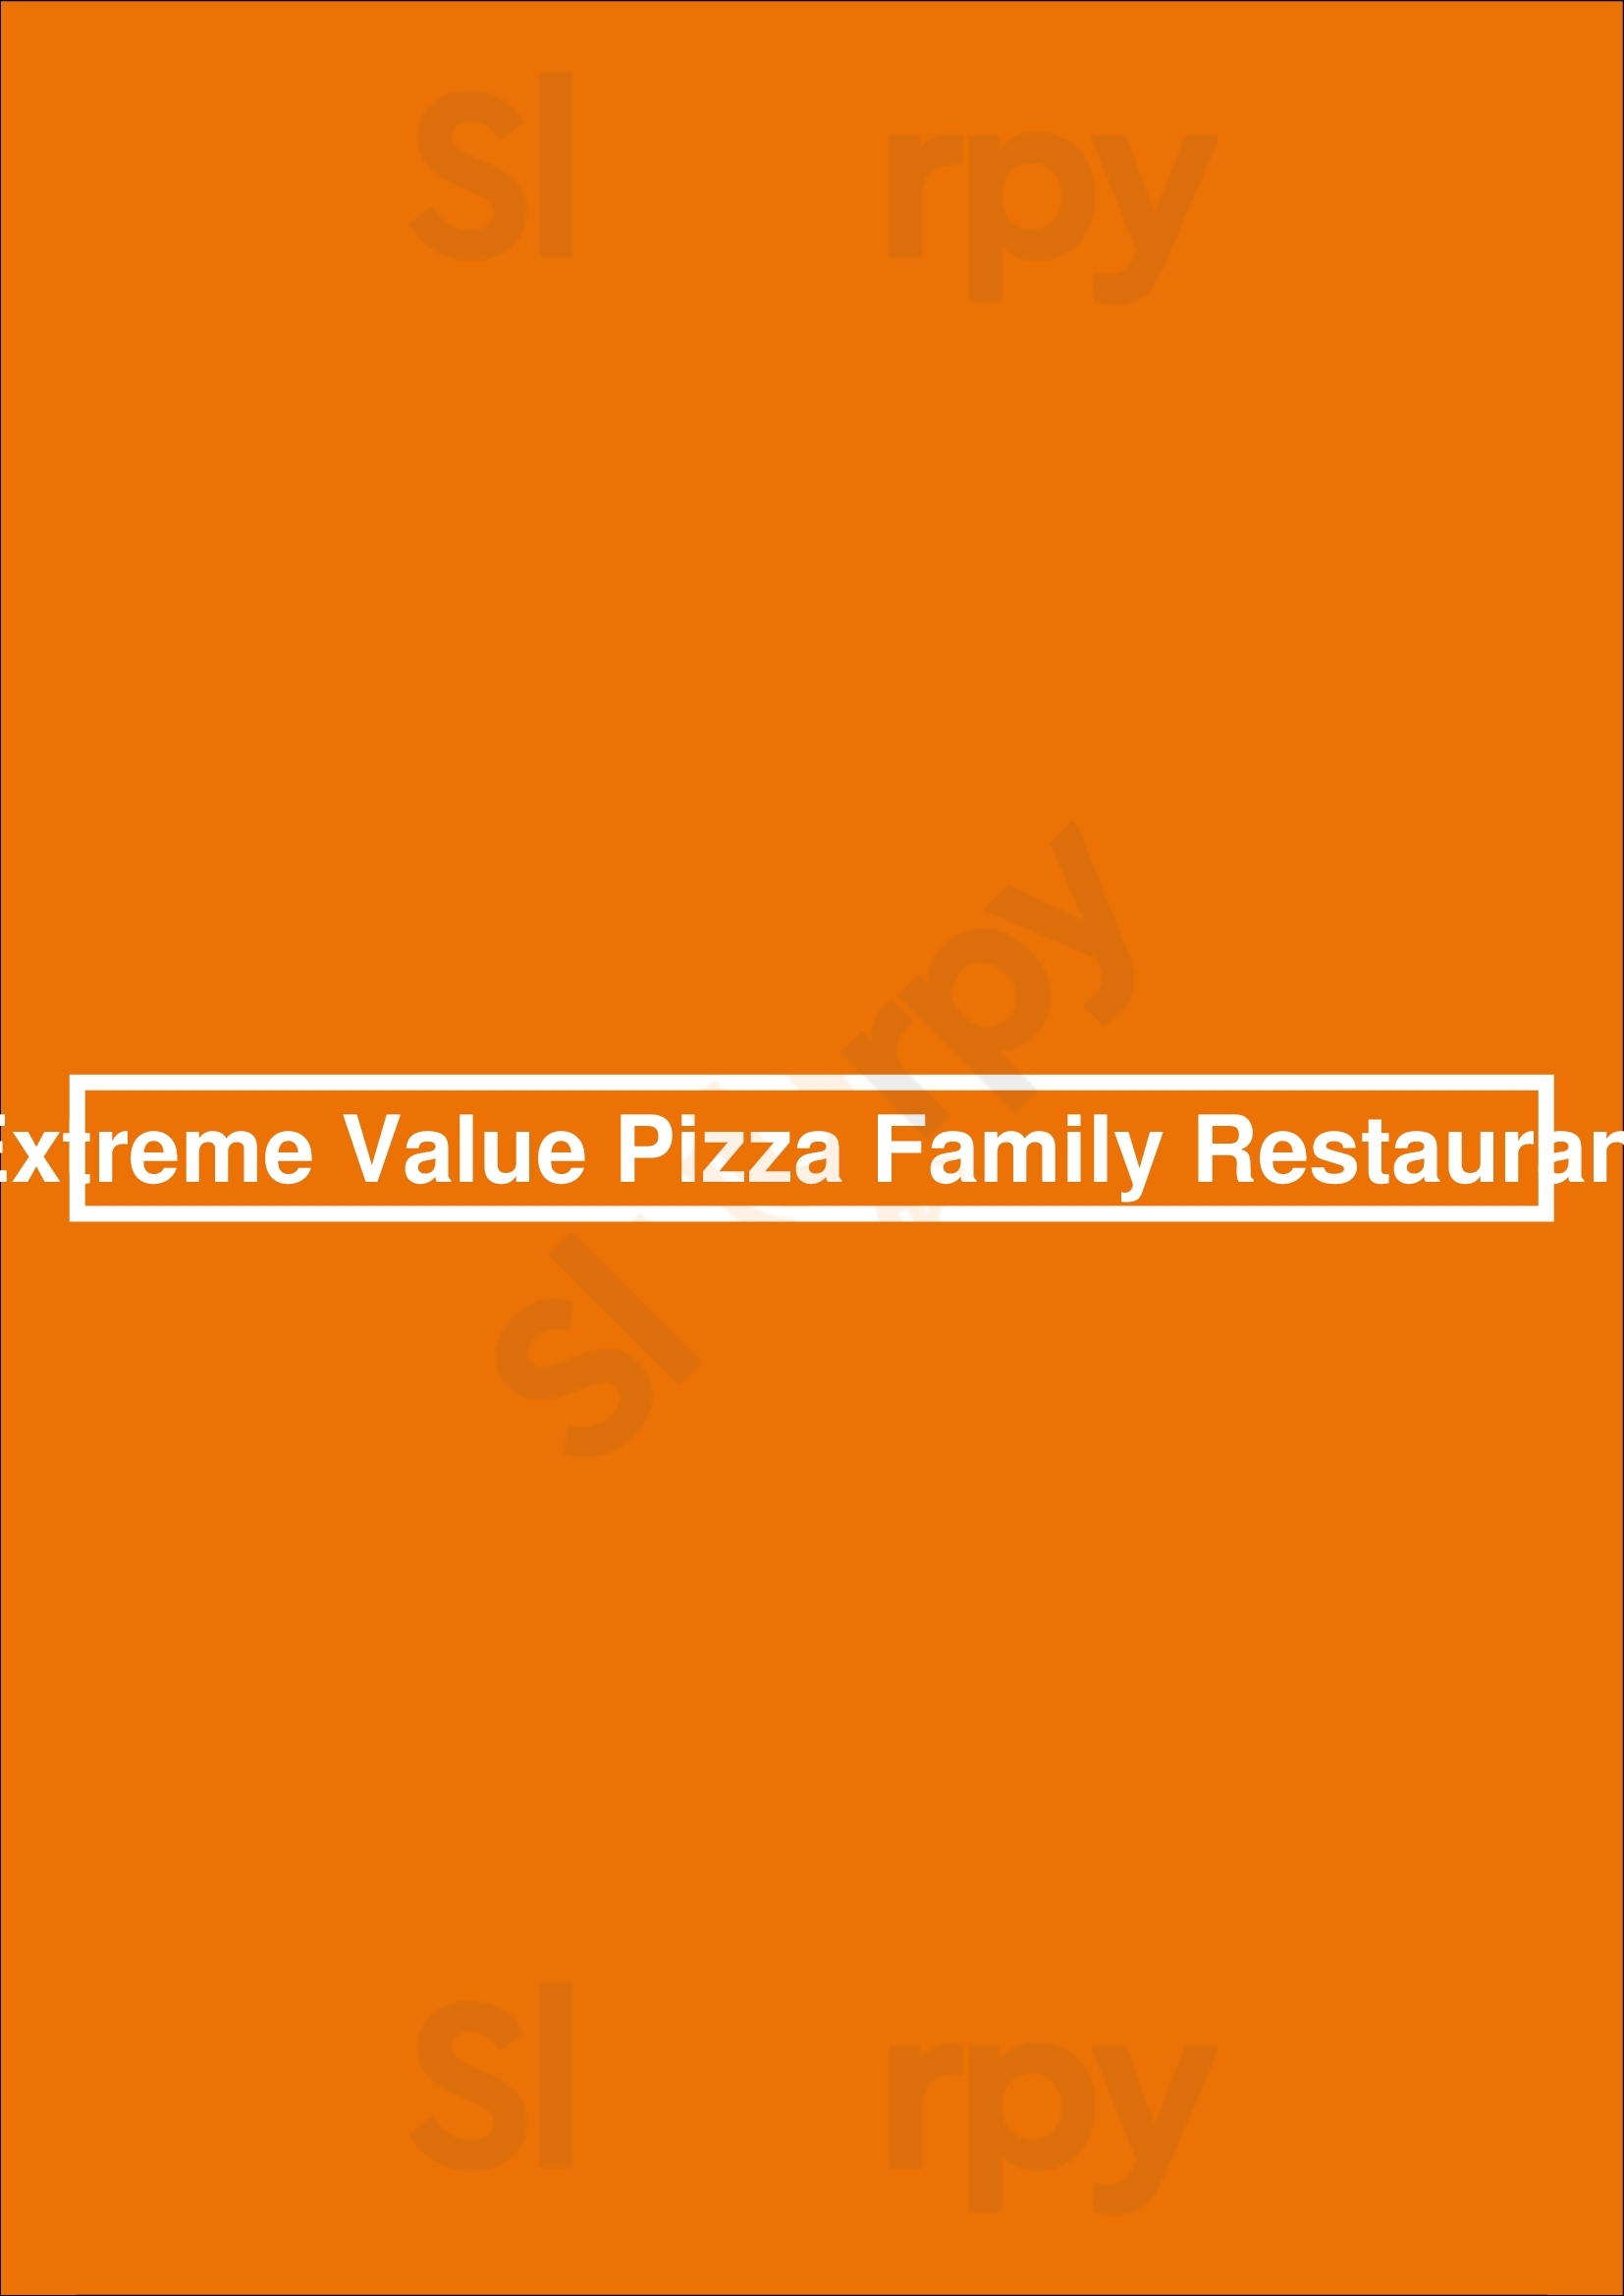 Extreme Value Pizza Family Restaurant Regina Menu - 1